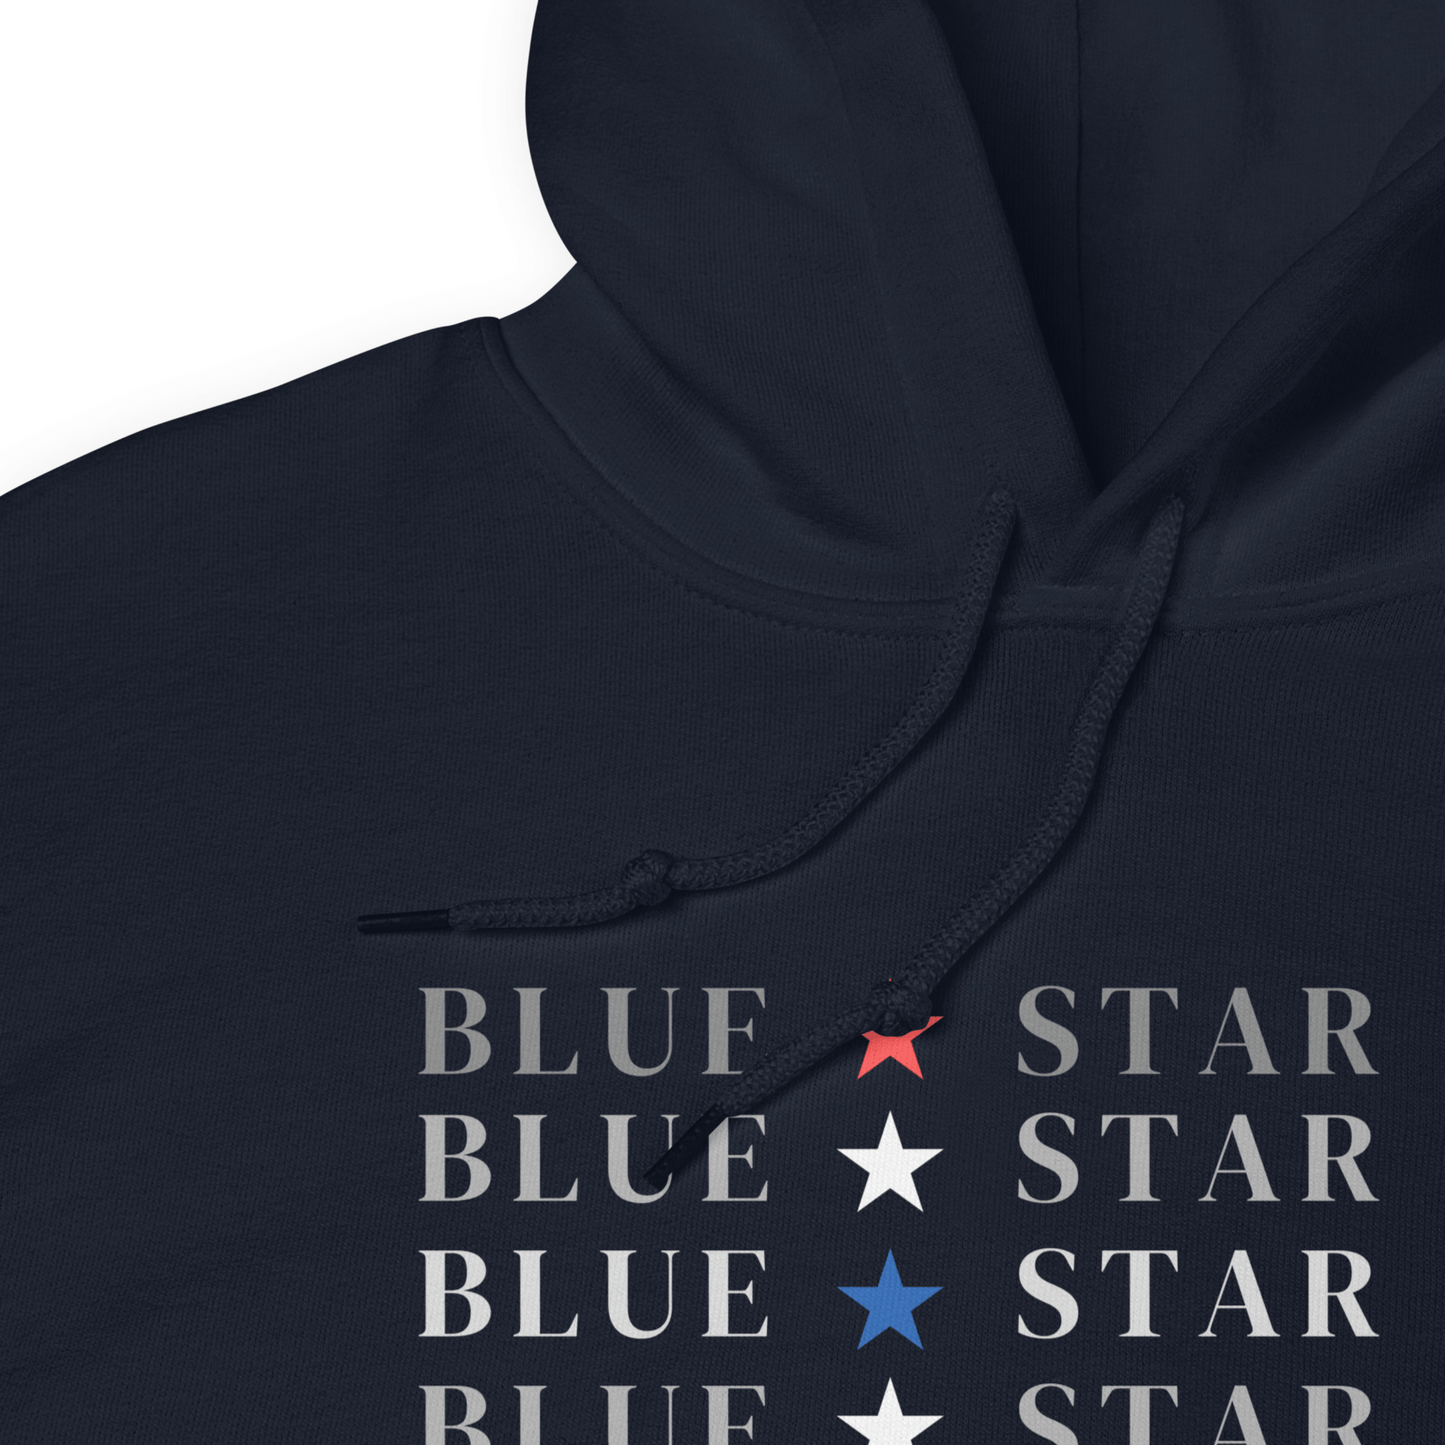 Blue Star Mom Hooded Sweatshirt